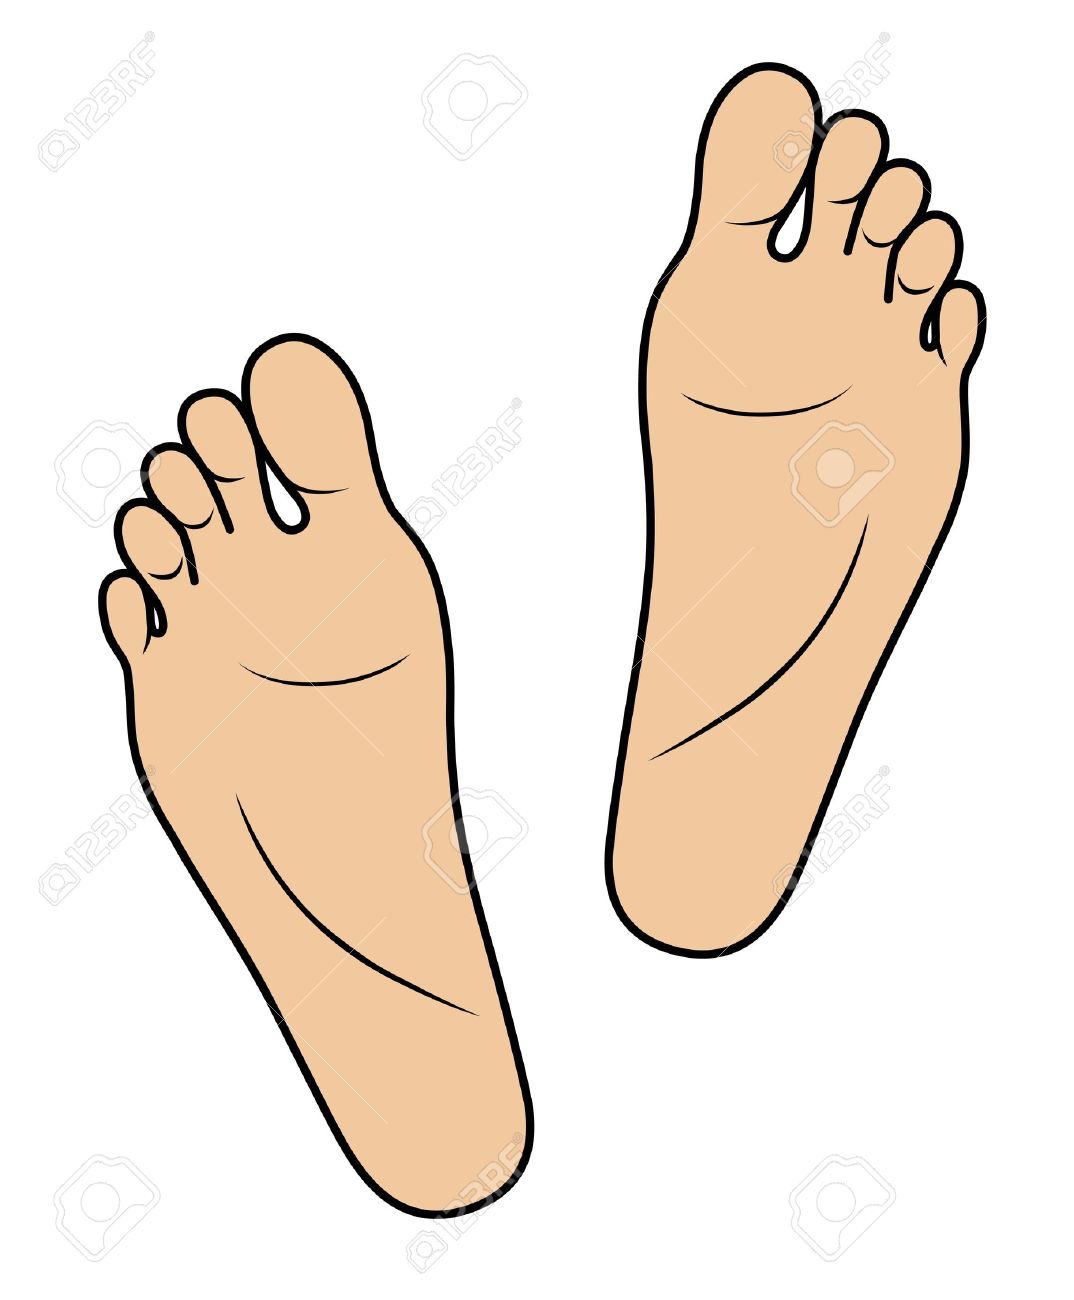 Foot feet clip art free clipa